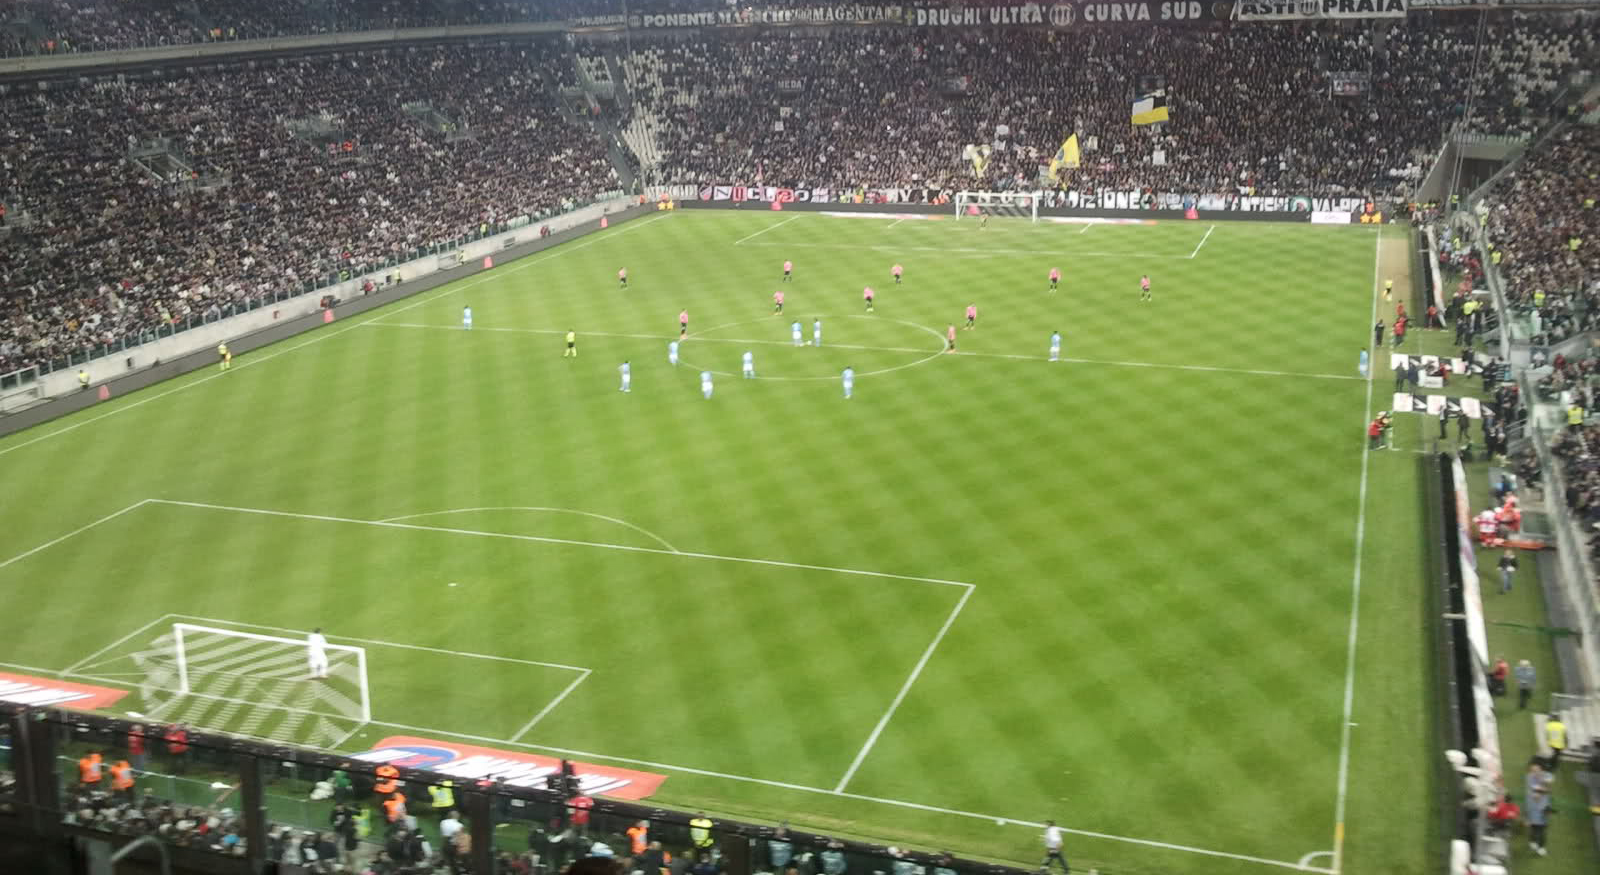 File:Inside Juventus Stadium (2).jpg - Wikimedia Commons